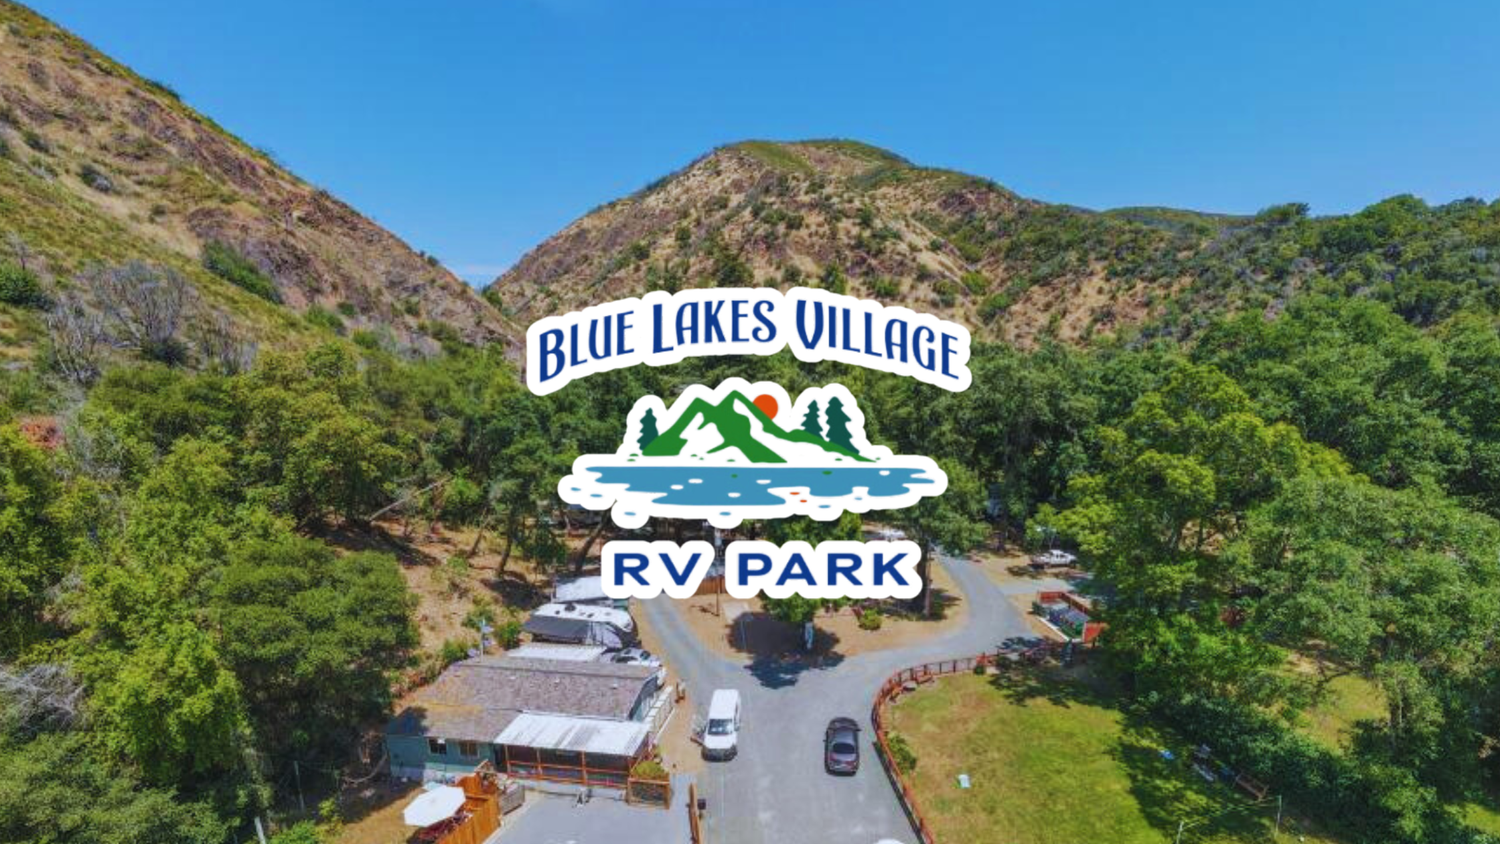 Blue Lakes Village RV Park